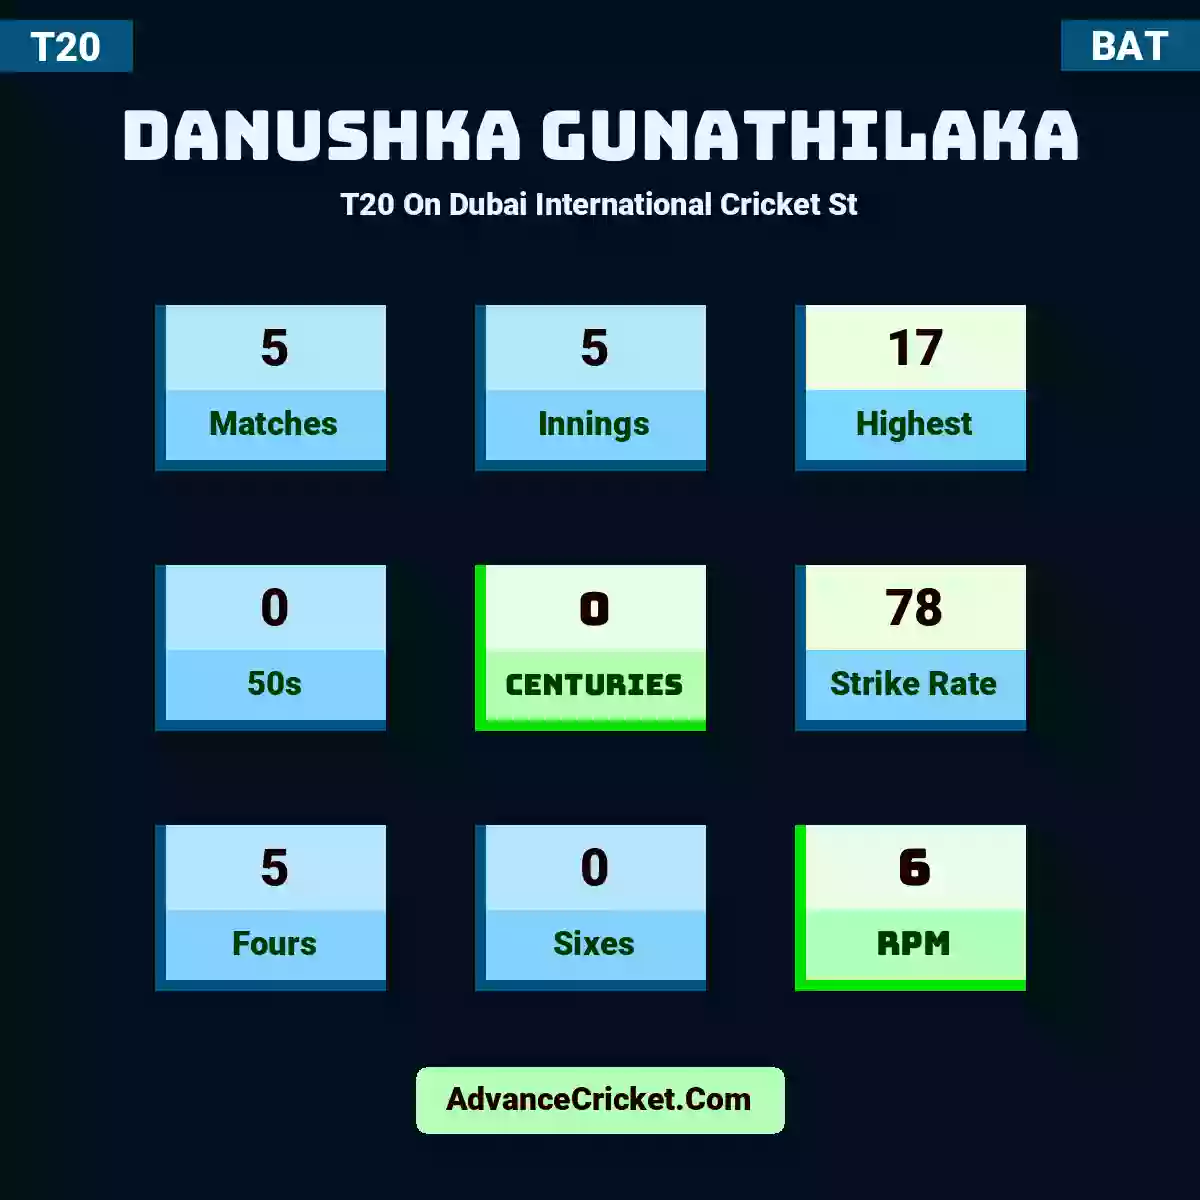 Danushka Gunathilaka T20  On Dubai International Cricket St, Danushka Gunathilaka played 5 matches, scored 17 runs as highest, 0 half-centuries, and 0 centuries, with a strike rate of 78. D.Gunathilaka hit 5 fours and 0 sixes, with an RPM of 6.